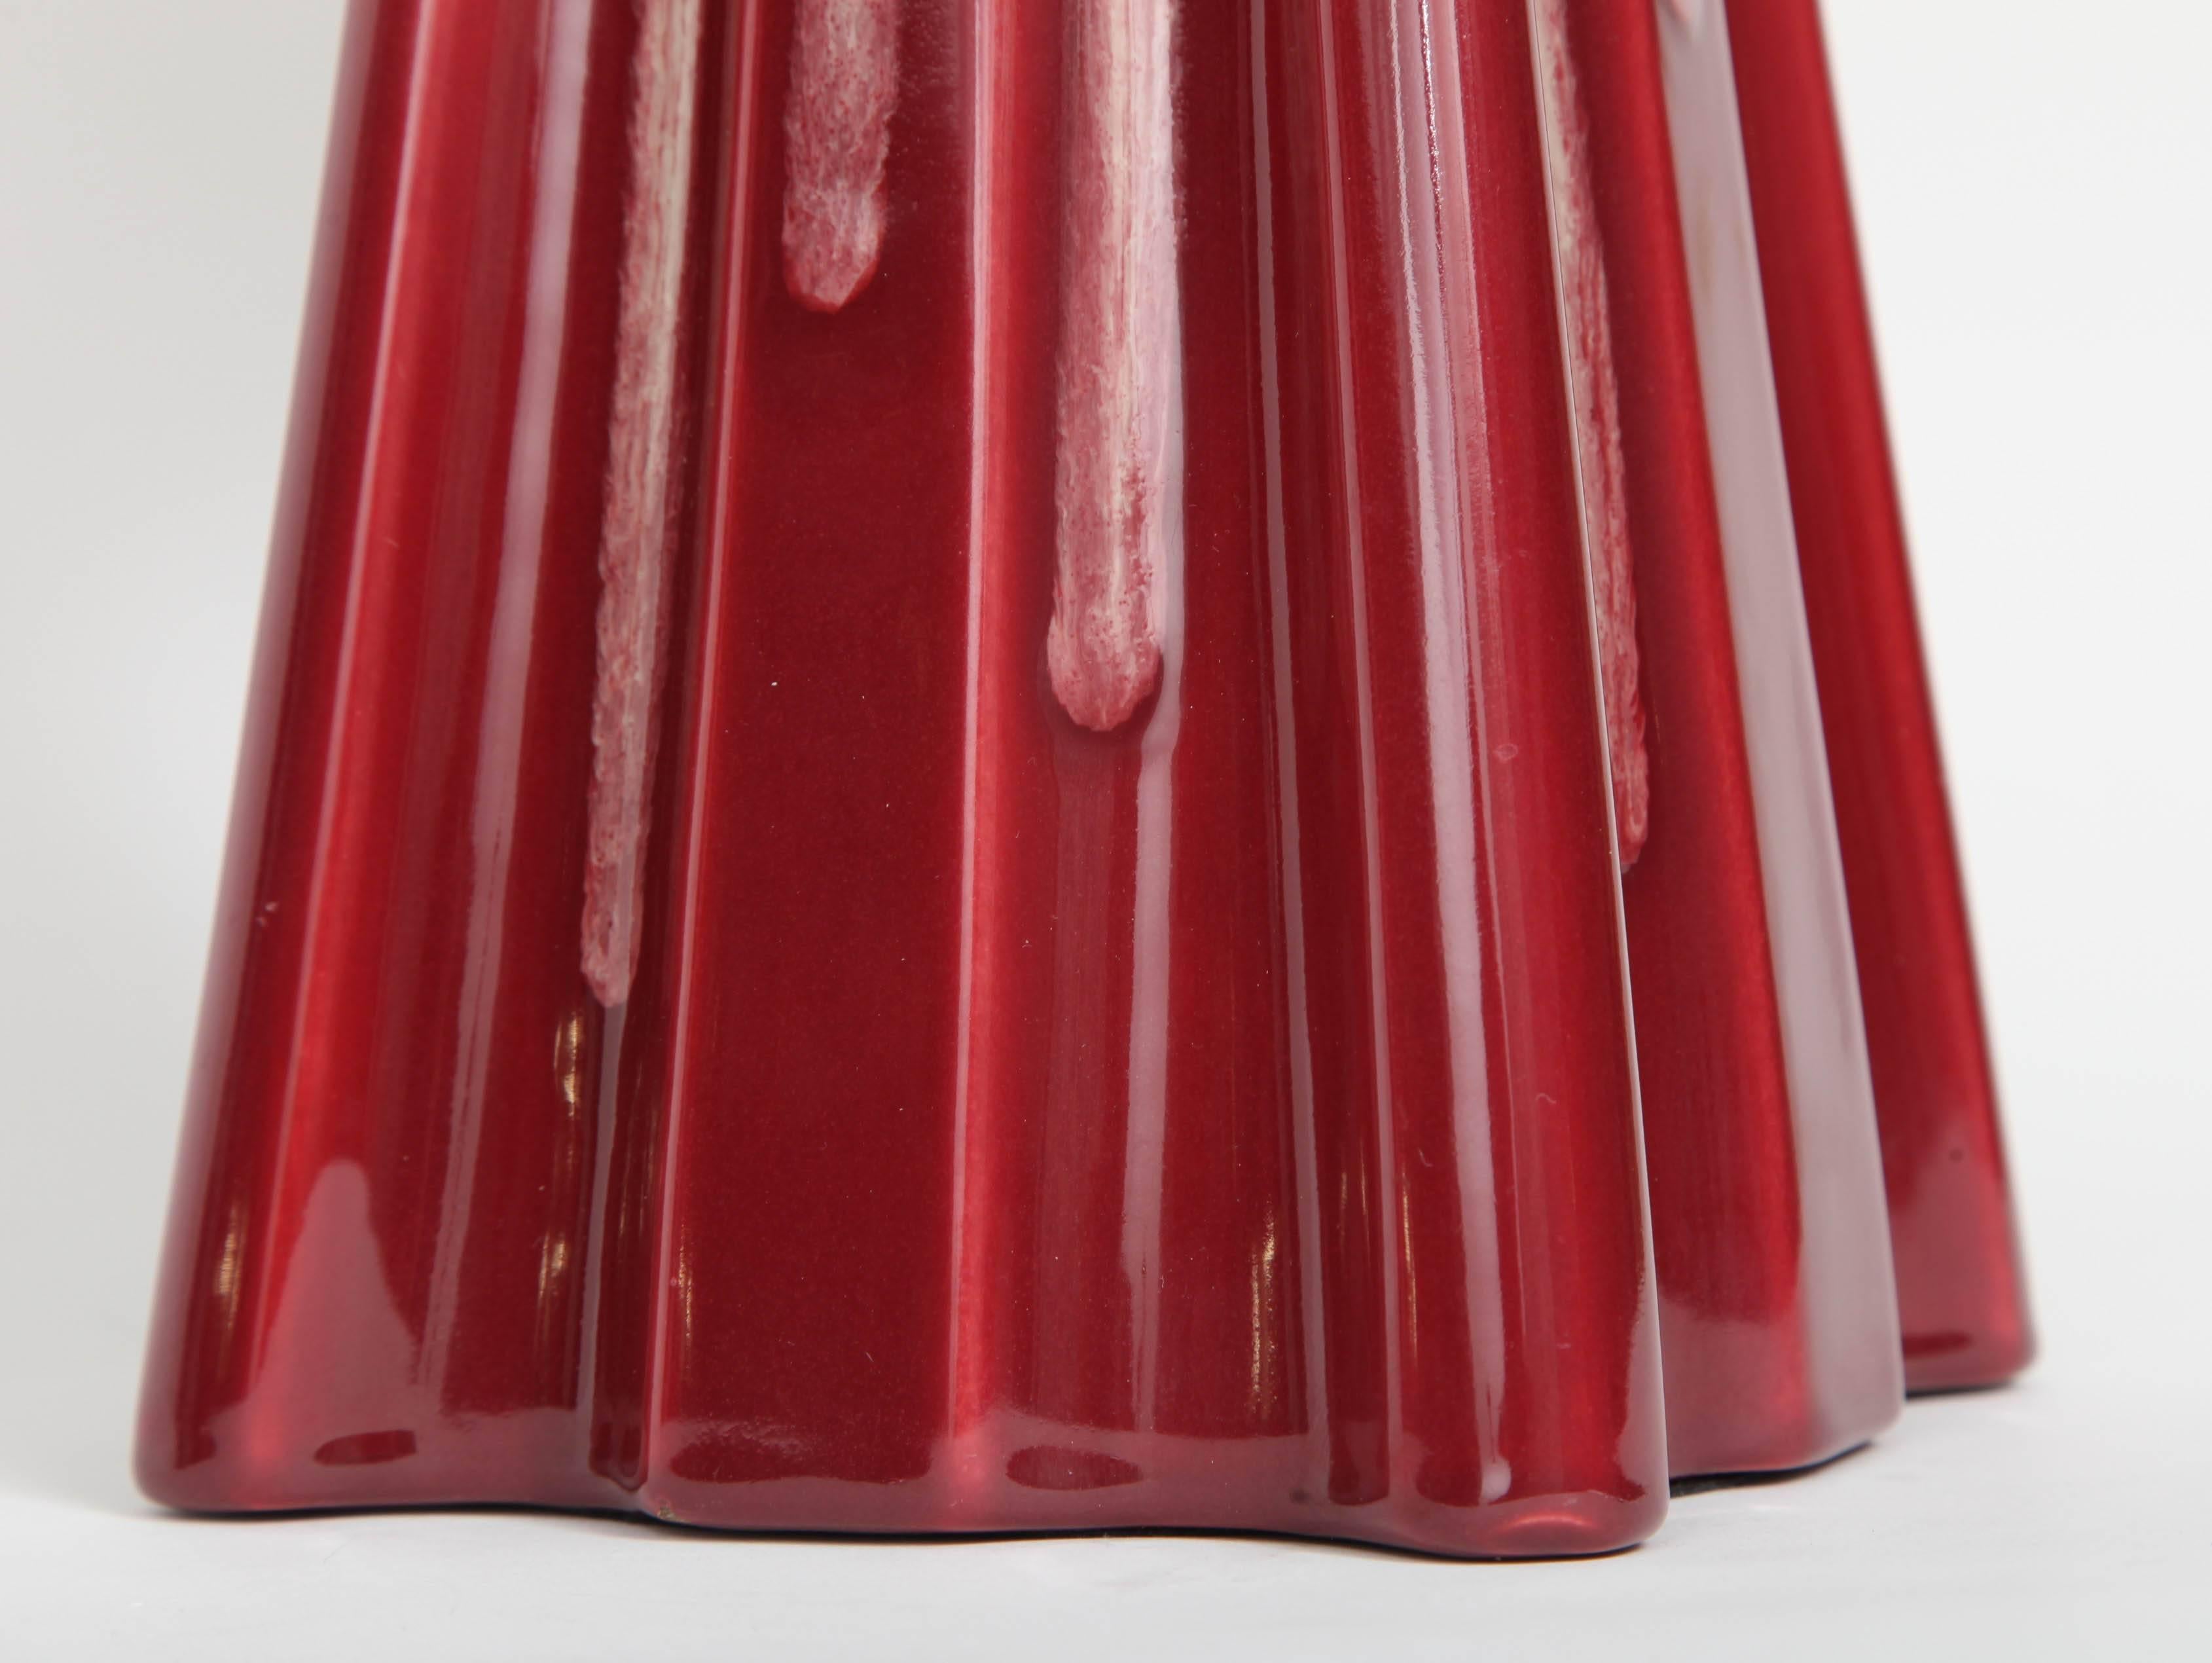 1940s Cranberry Glazed Ceramic Lamps 2